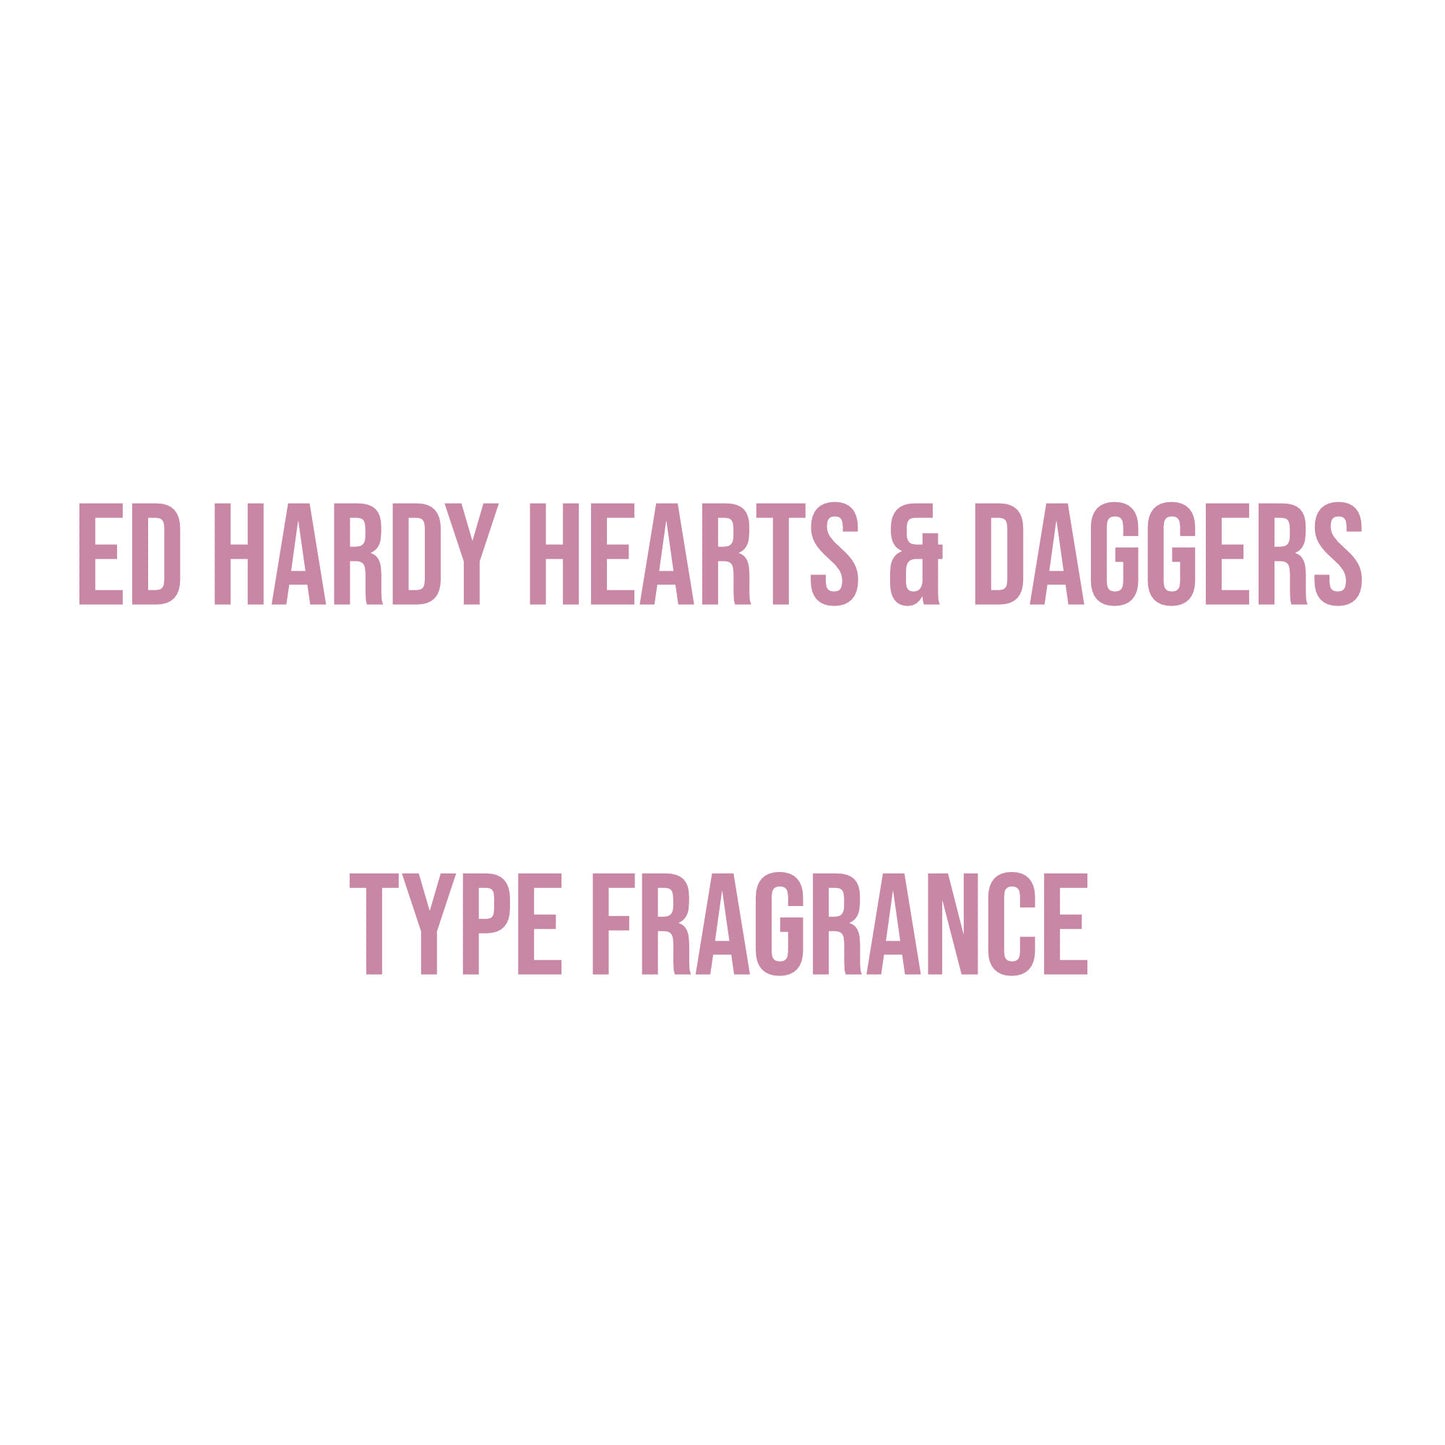 Ed Hardy Hearts & Daggers Type Fragrance